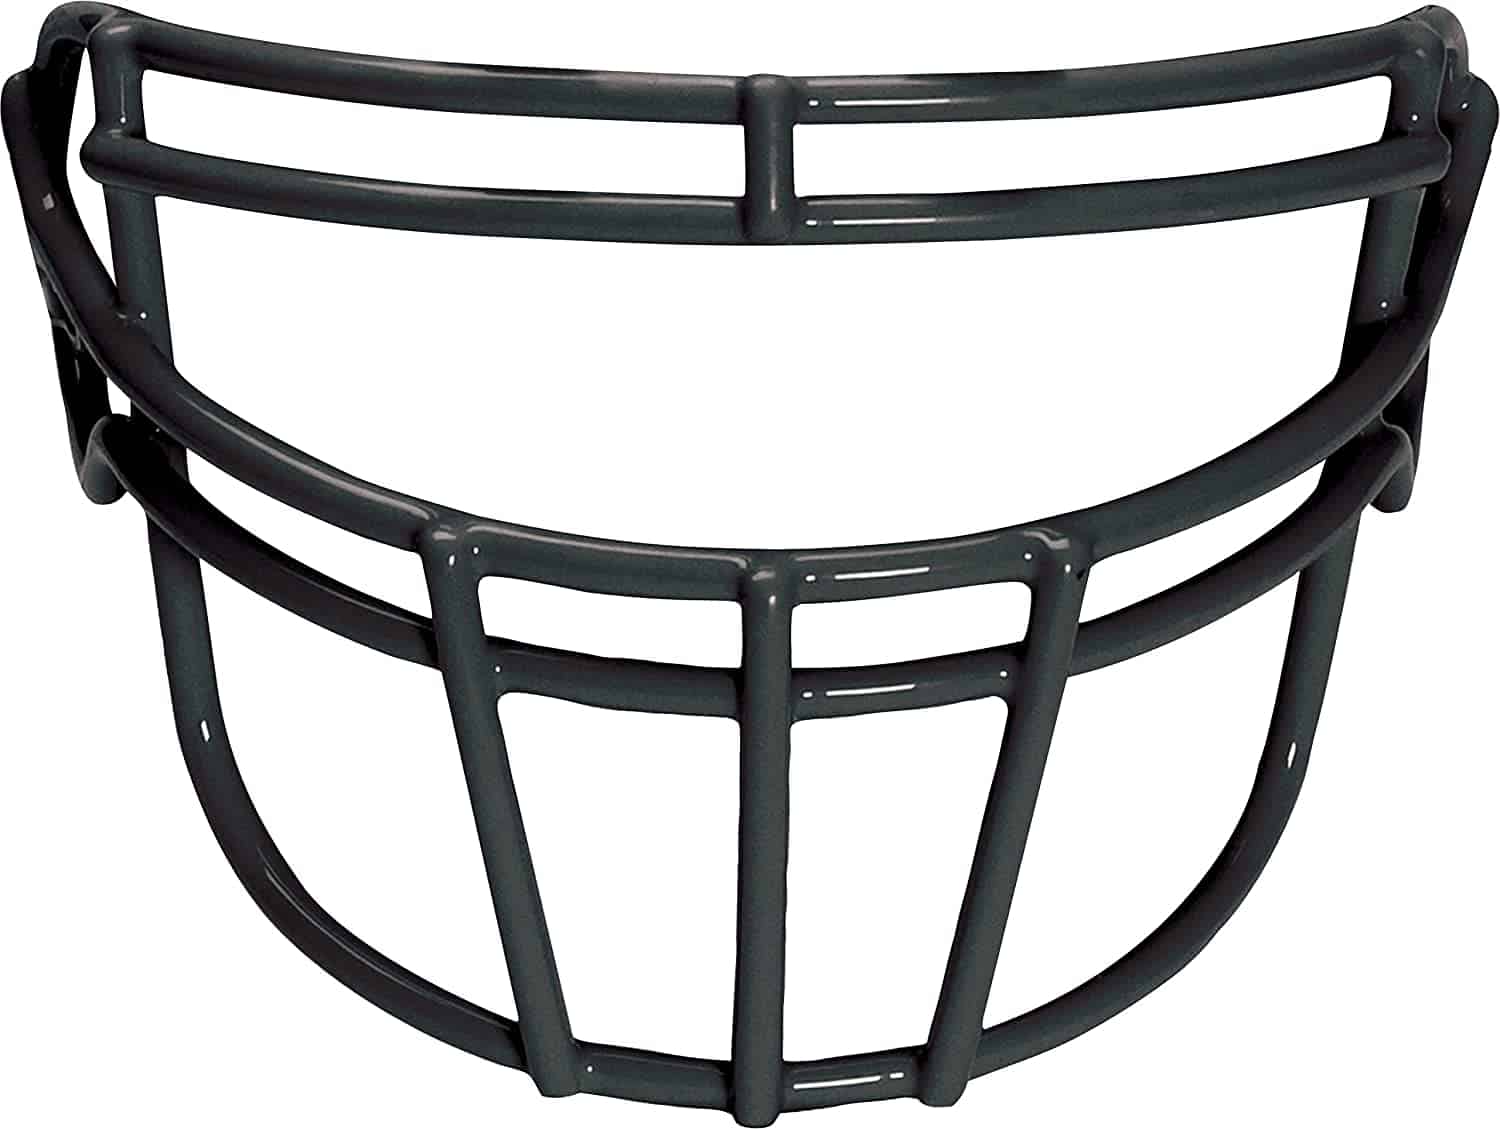 Beste overall American Football facemask- Schutt DNA ROPO UB Varsity facemask